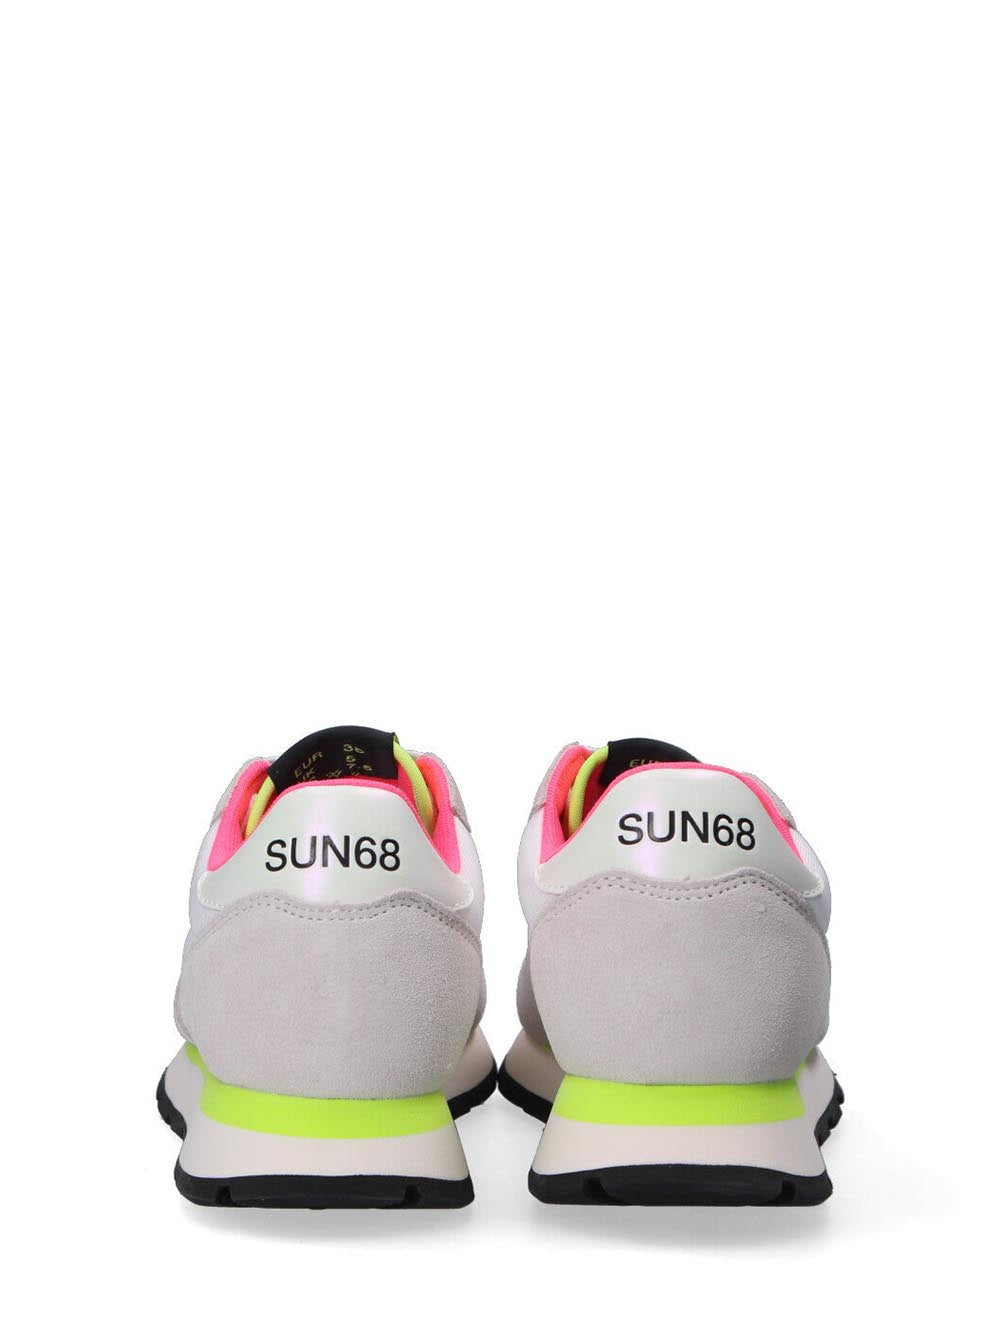 SUN68 Sneakers Donna Bianco/Giallo Fluo